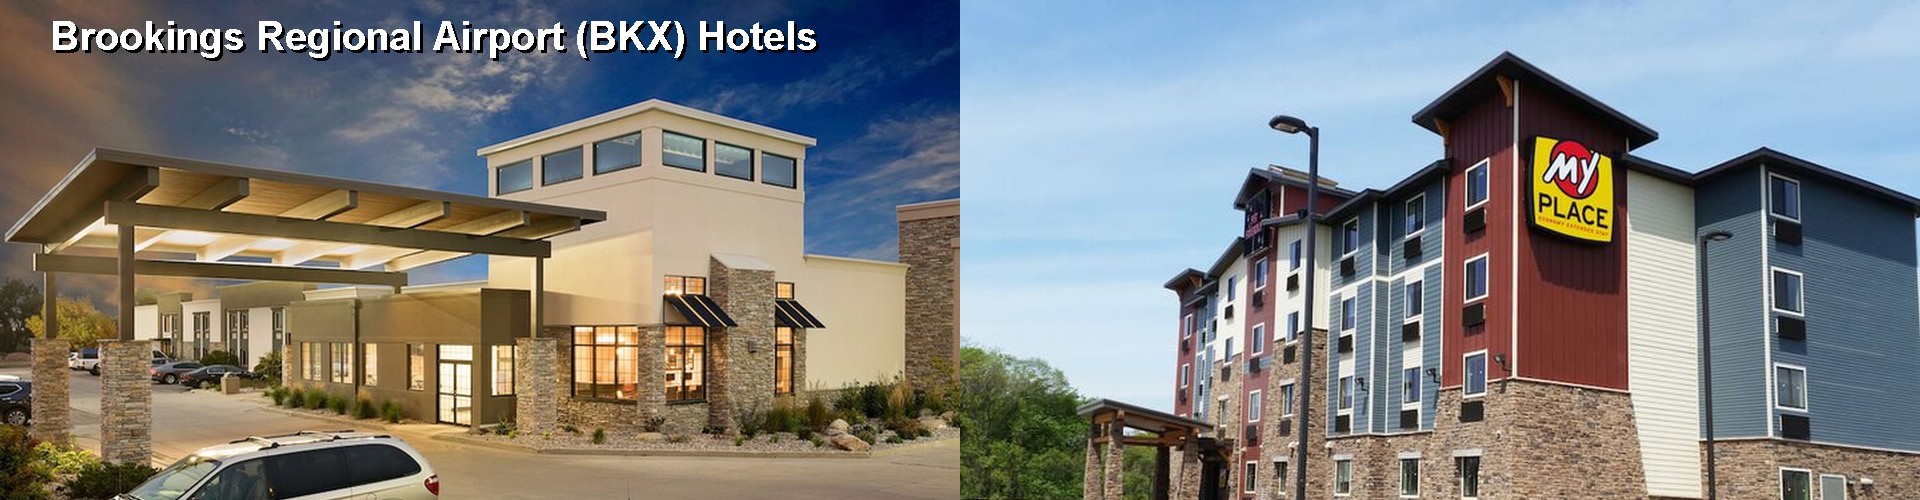 5 Best Hotels near Brookings Regional Airport (BKX)